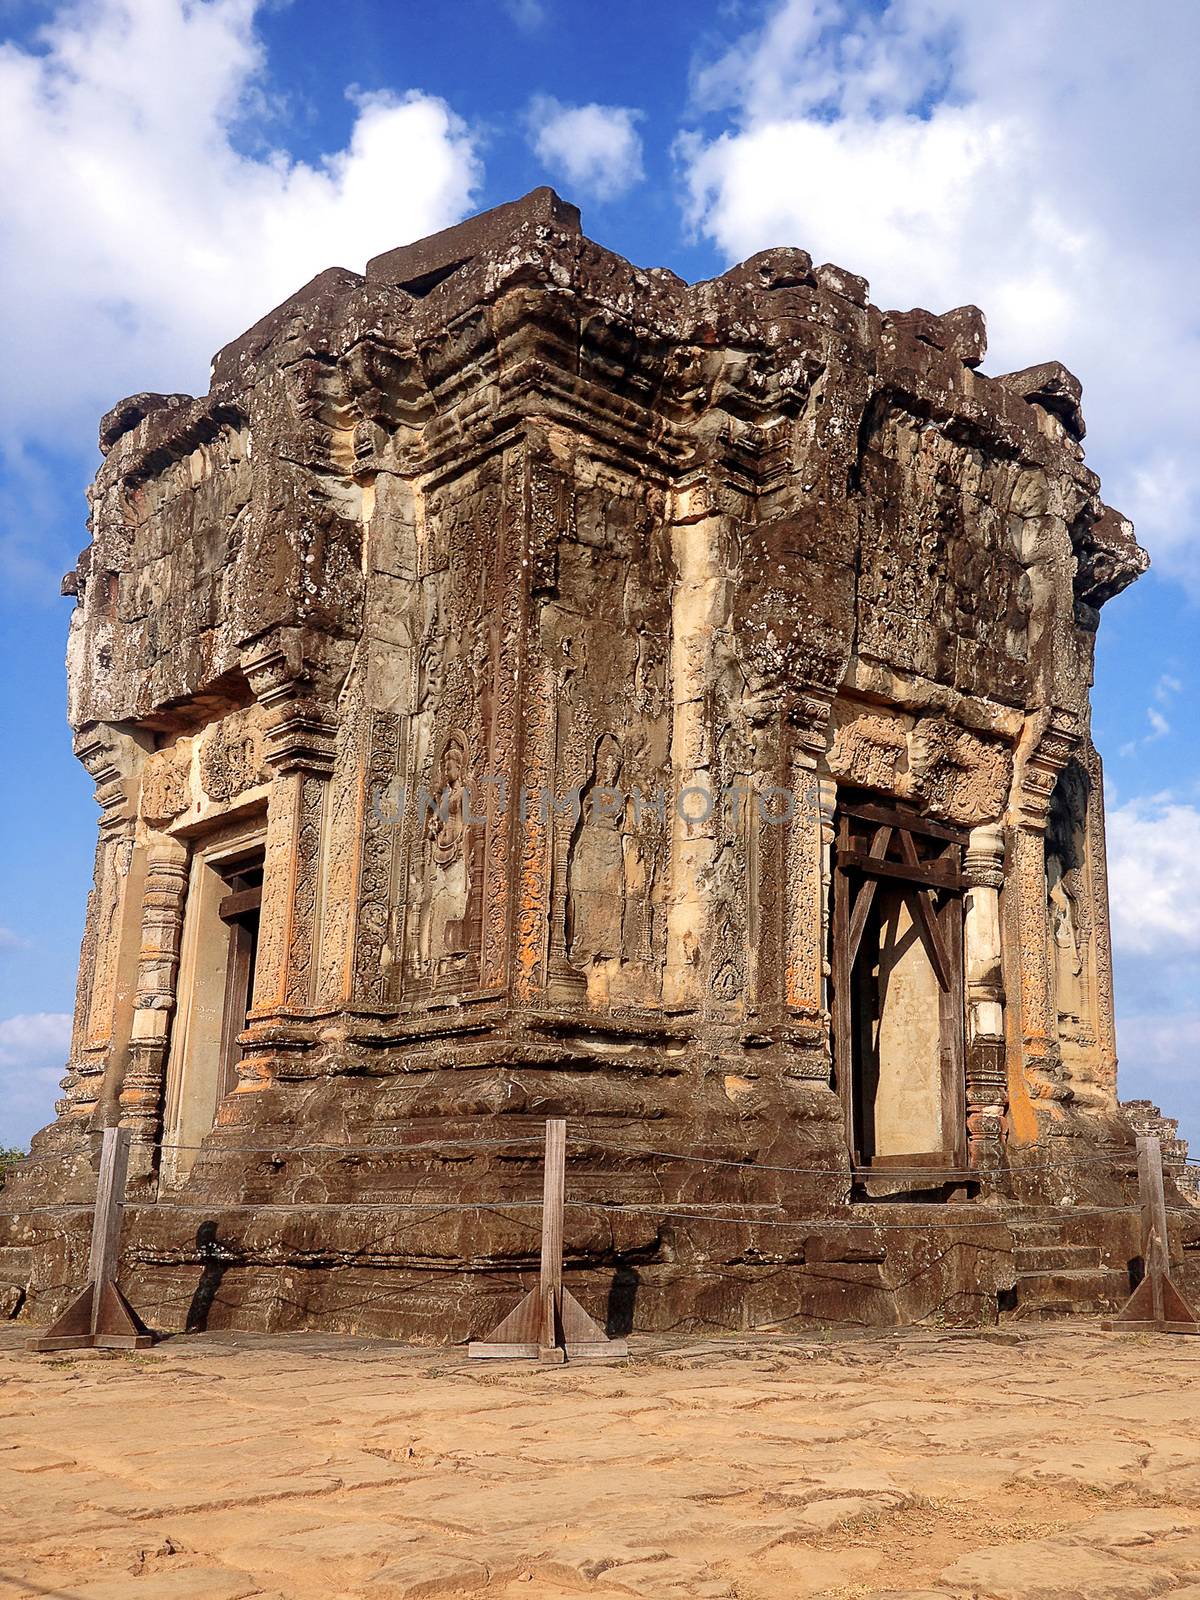 Phnom bakheng Temple,Angkor , Siem reap, Cambodia. by orsor